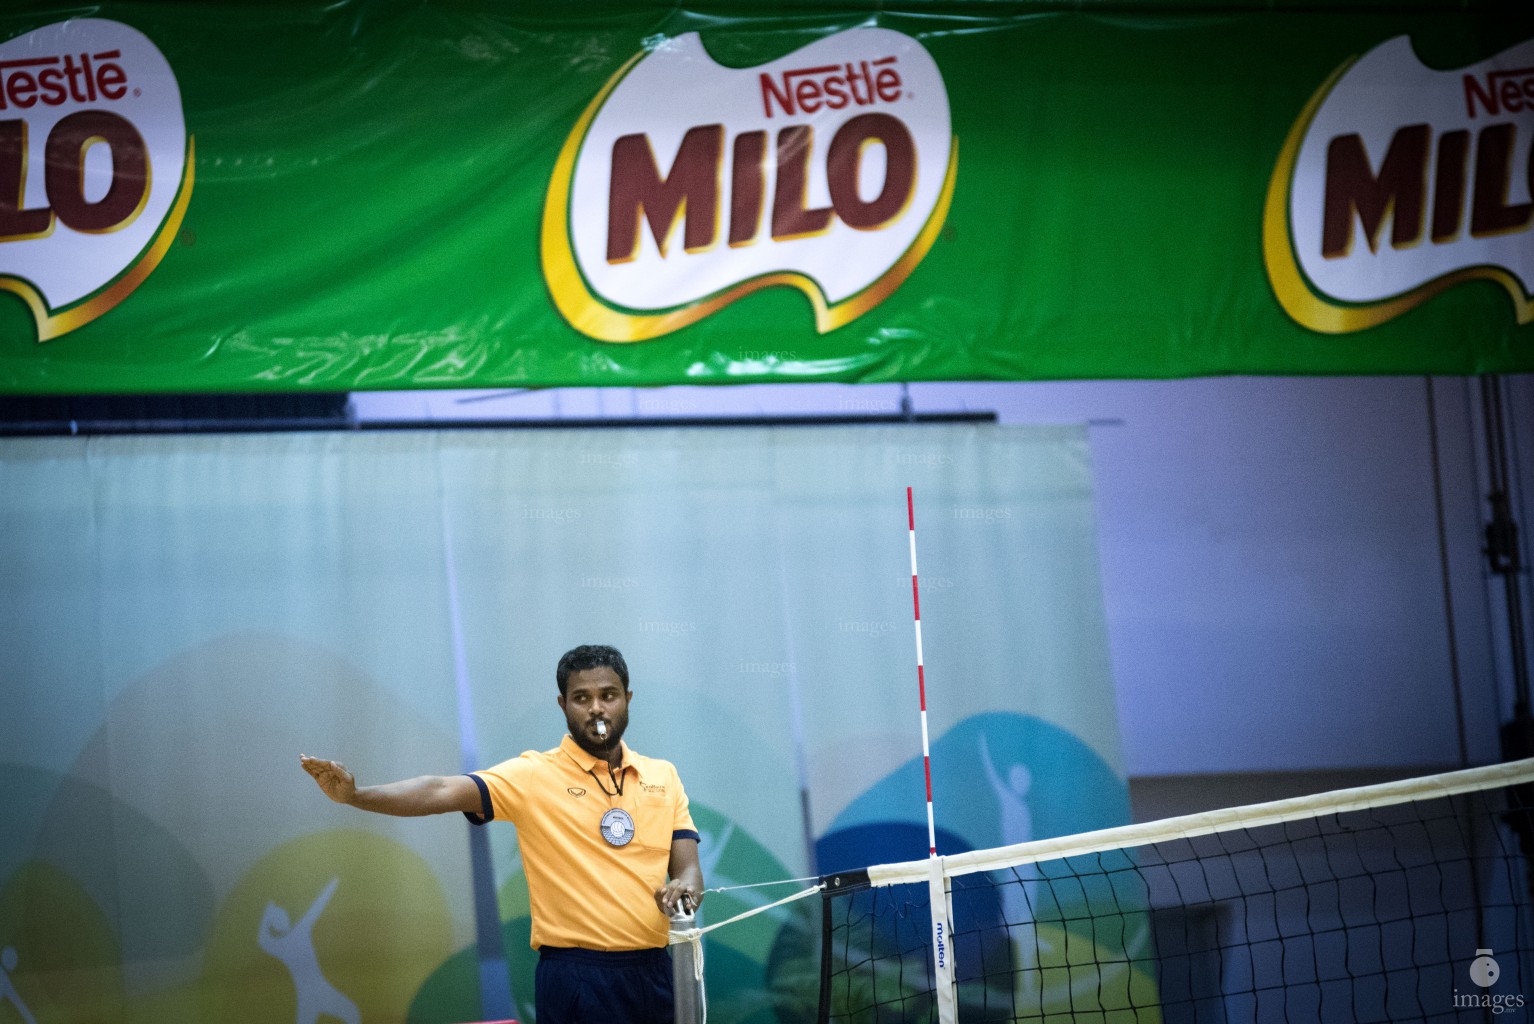 MILO Interschool Volleyball Tournament 2018 (U16 Boys 3rd Place Playoff)